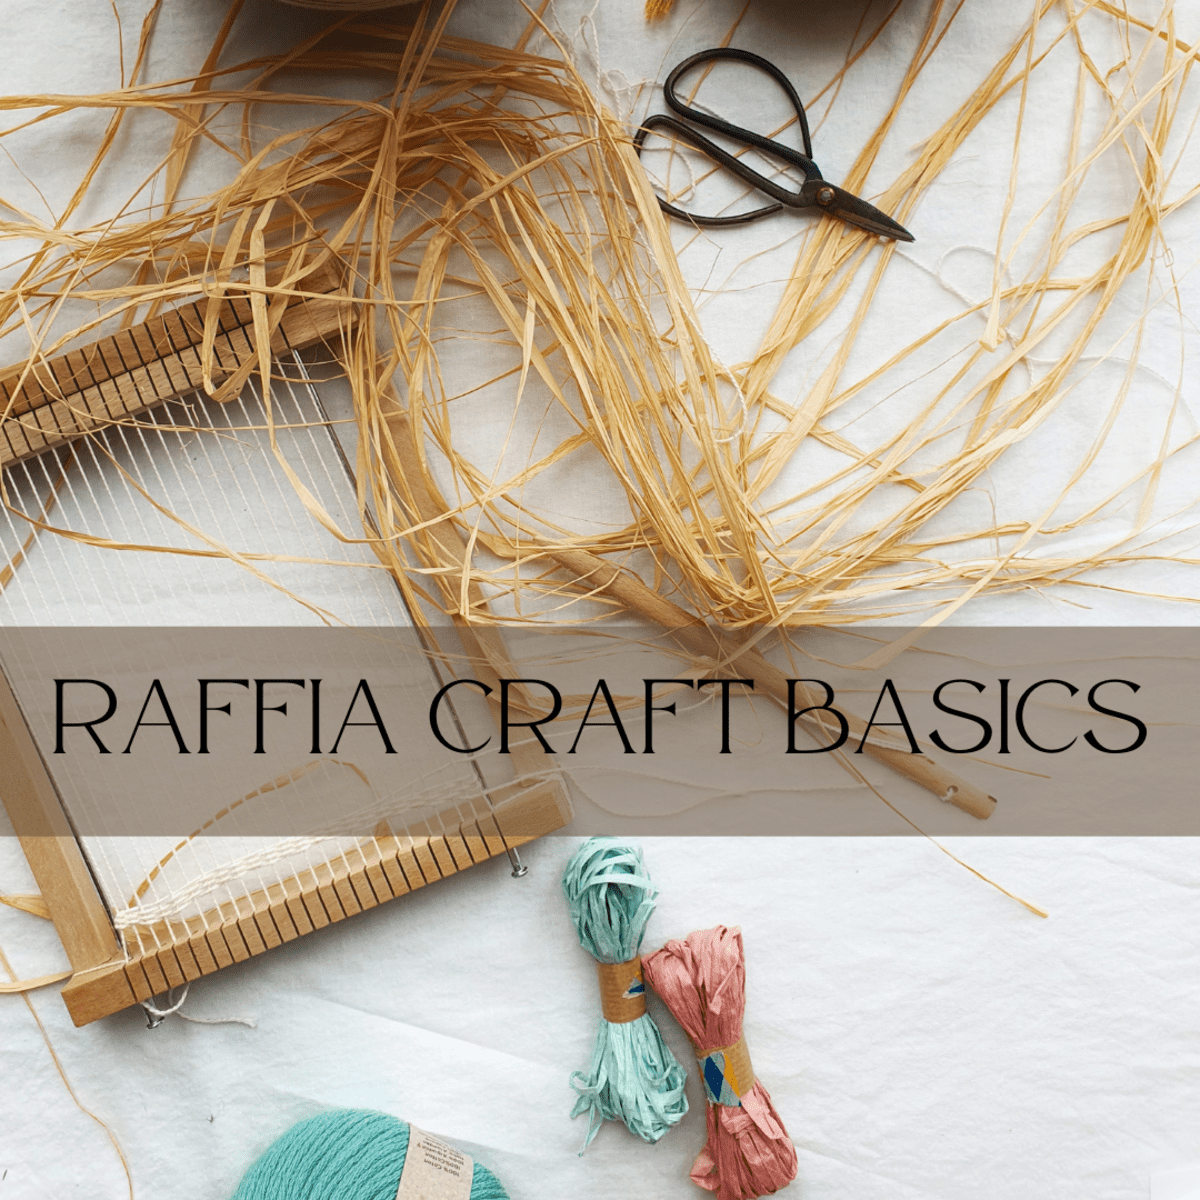 Raffia Craft Basics: How to Make a Simple Mat & Flowers - FeltMagnet